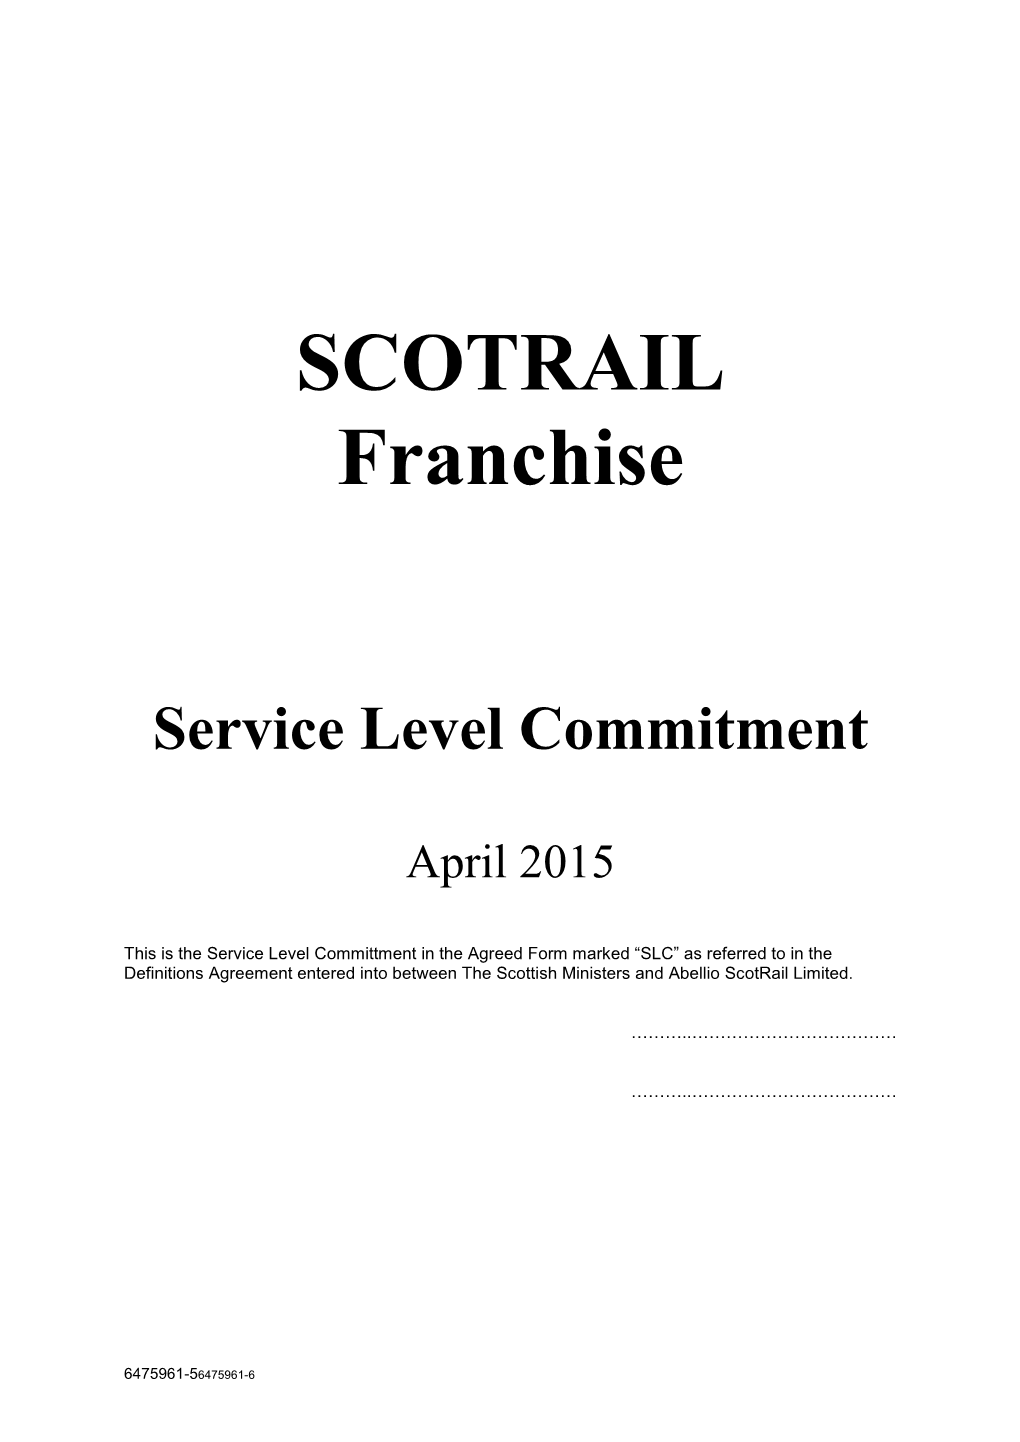 SCOTRAIL Franchise Service Level Commitment